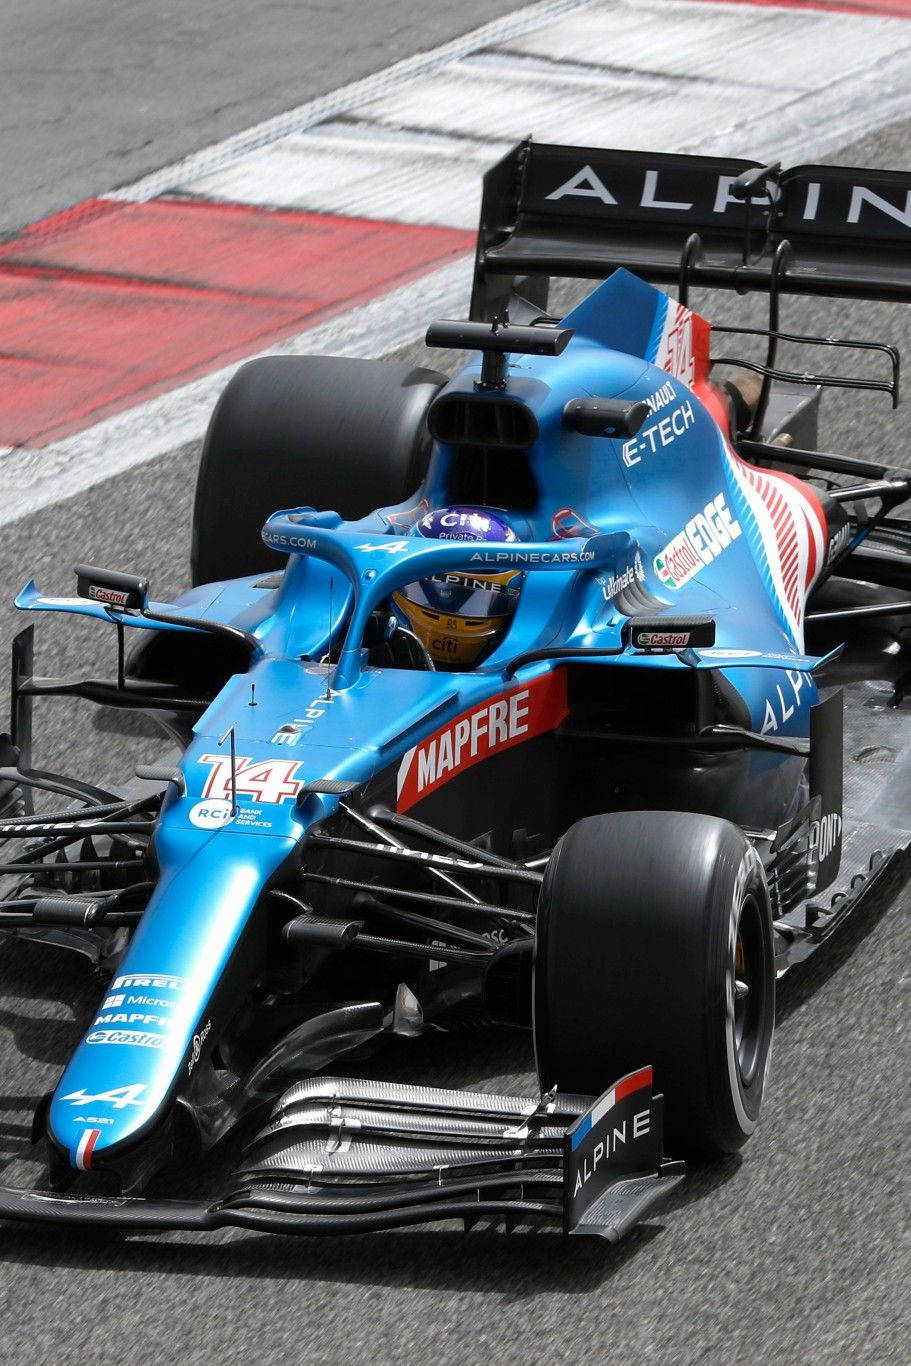 Blue Alpine Car On Racetrack Wallpaper